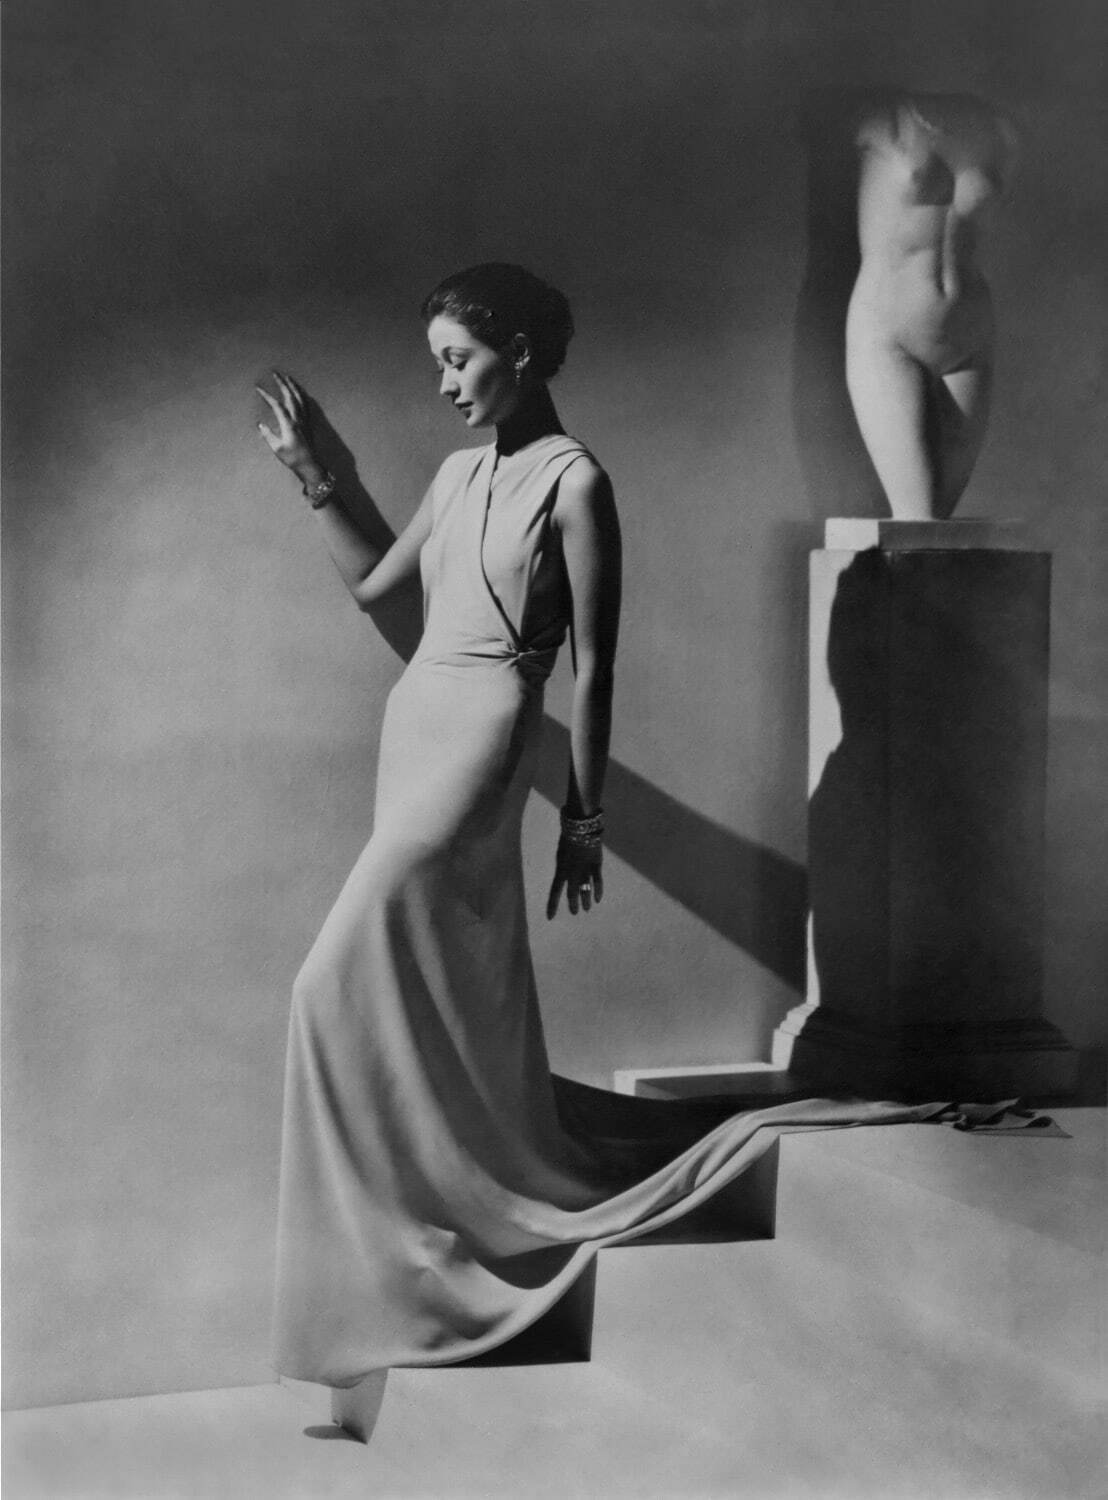 Toto Koopman, Evening dress by Augustabernard, 1934
©The George Hoyningen-Huene Estate Archives